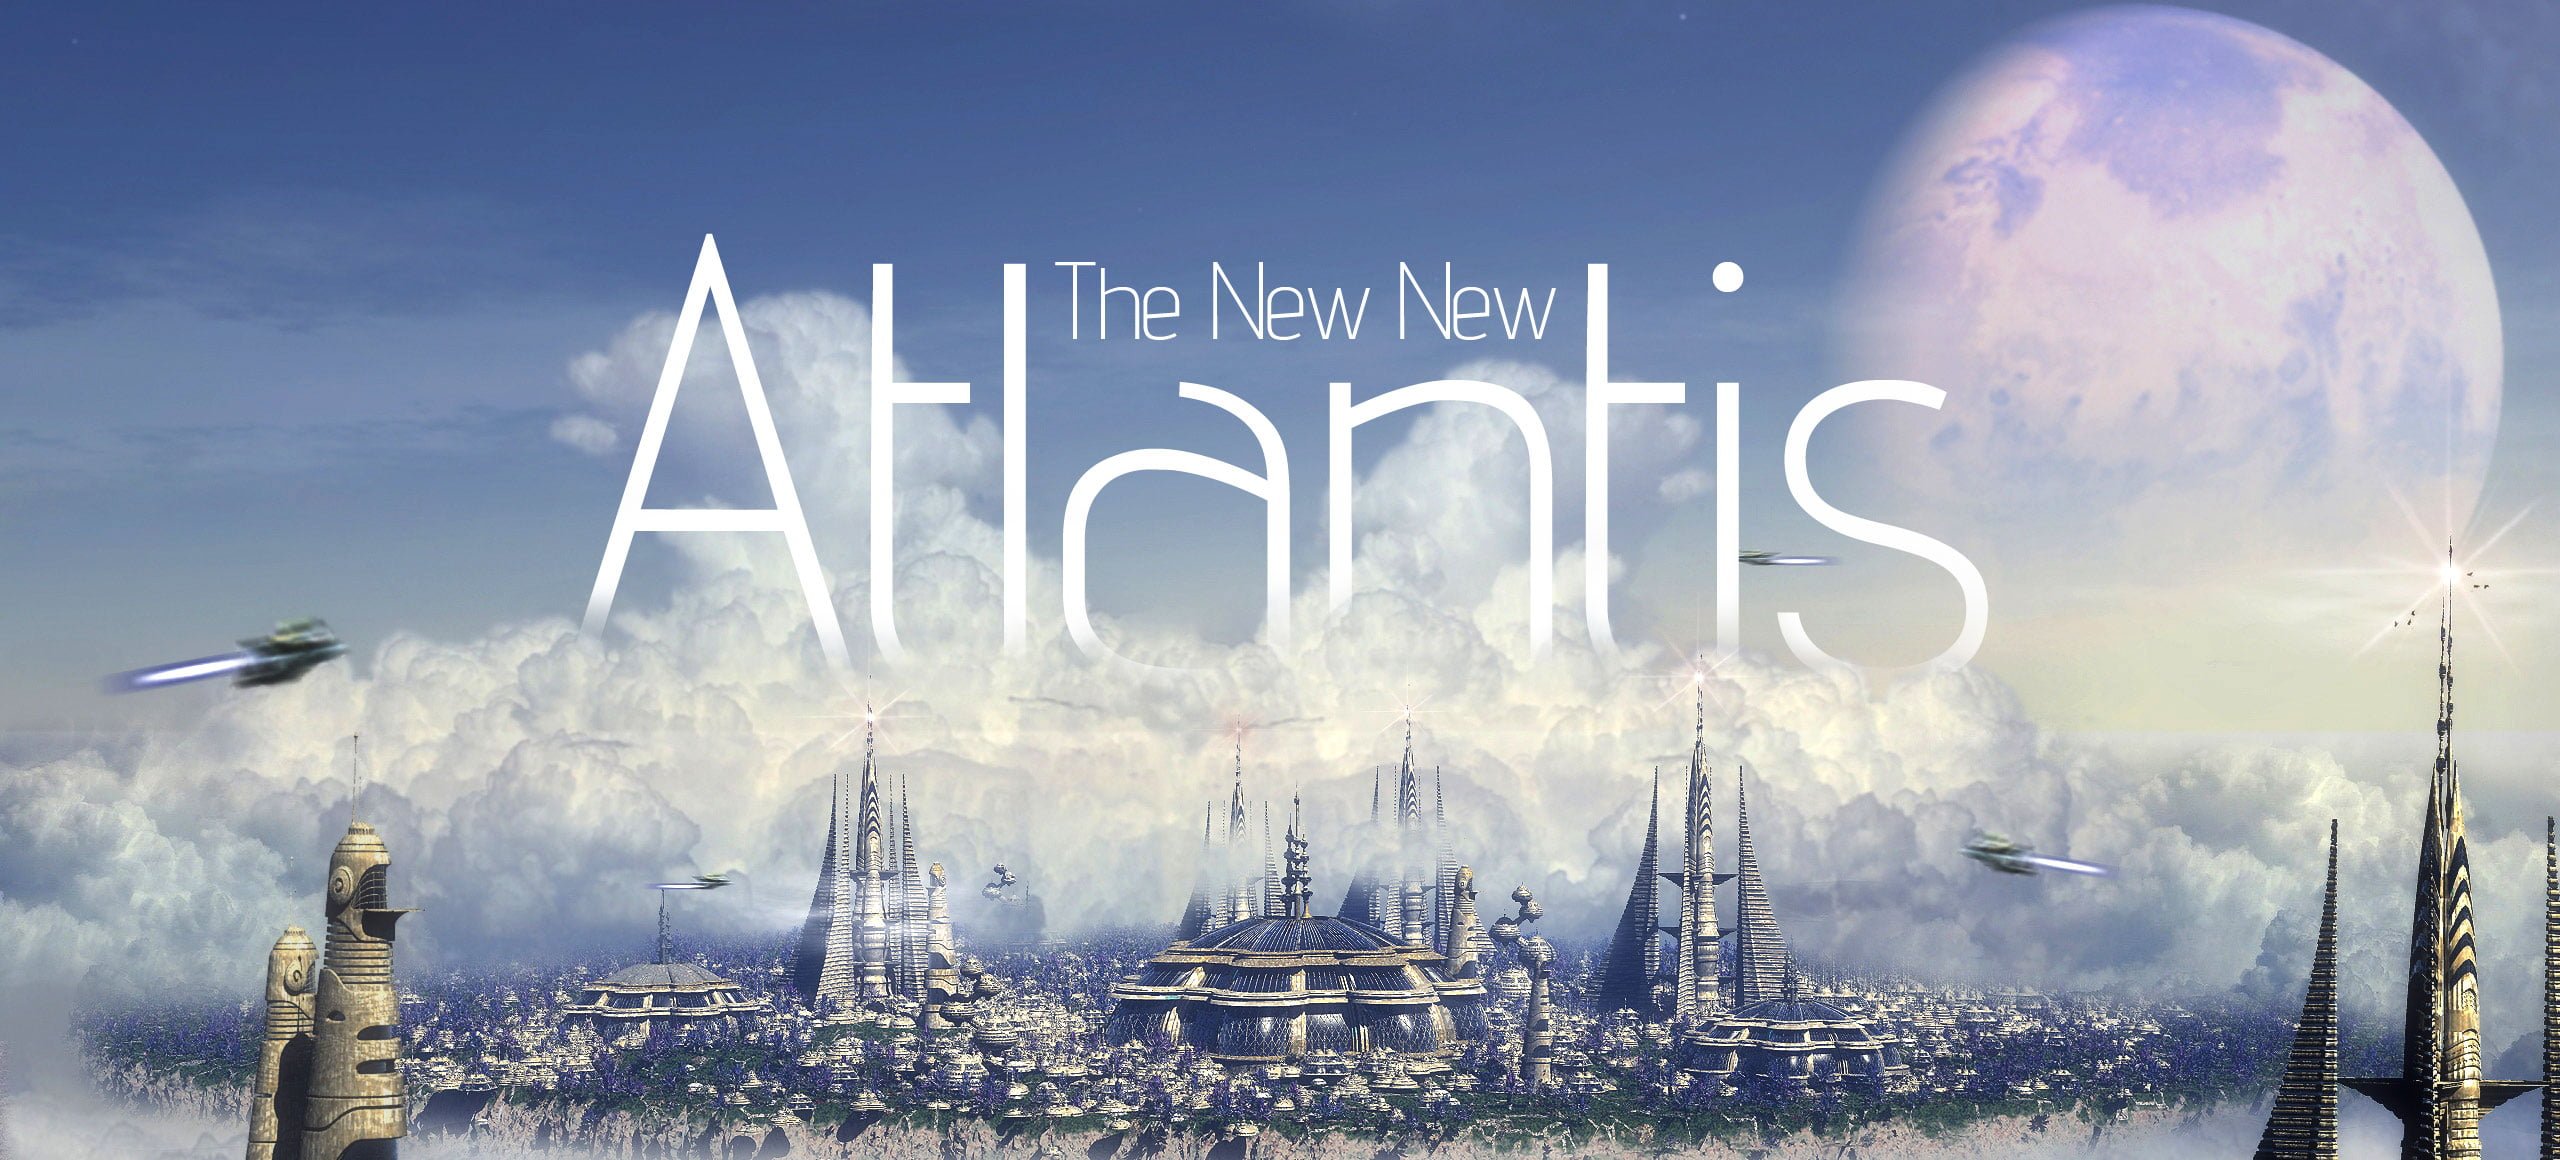 New atlantis. Новая Атлантида Бэкона. Бэкон ф. "новая Атлантида". Утопия Атлантида. Новая Атлантида книга.